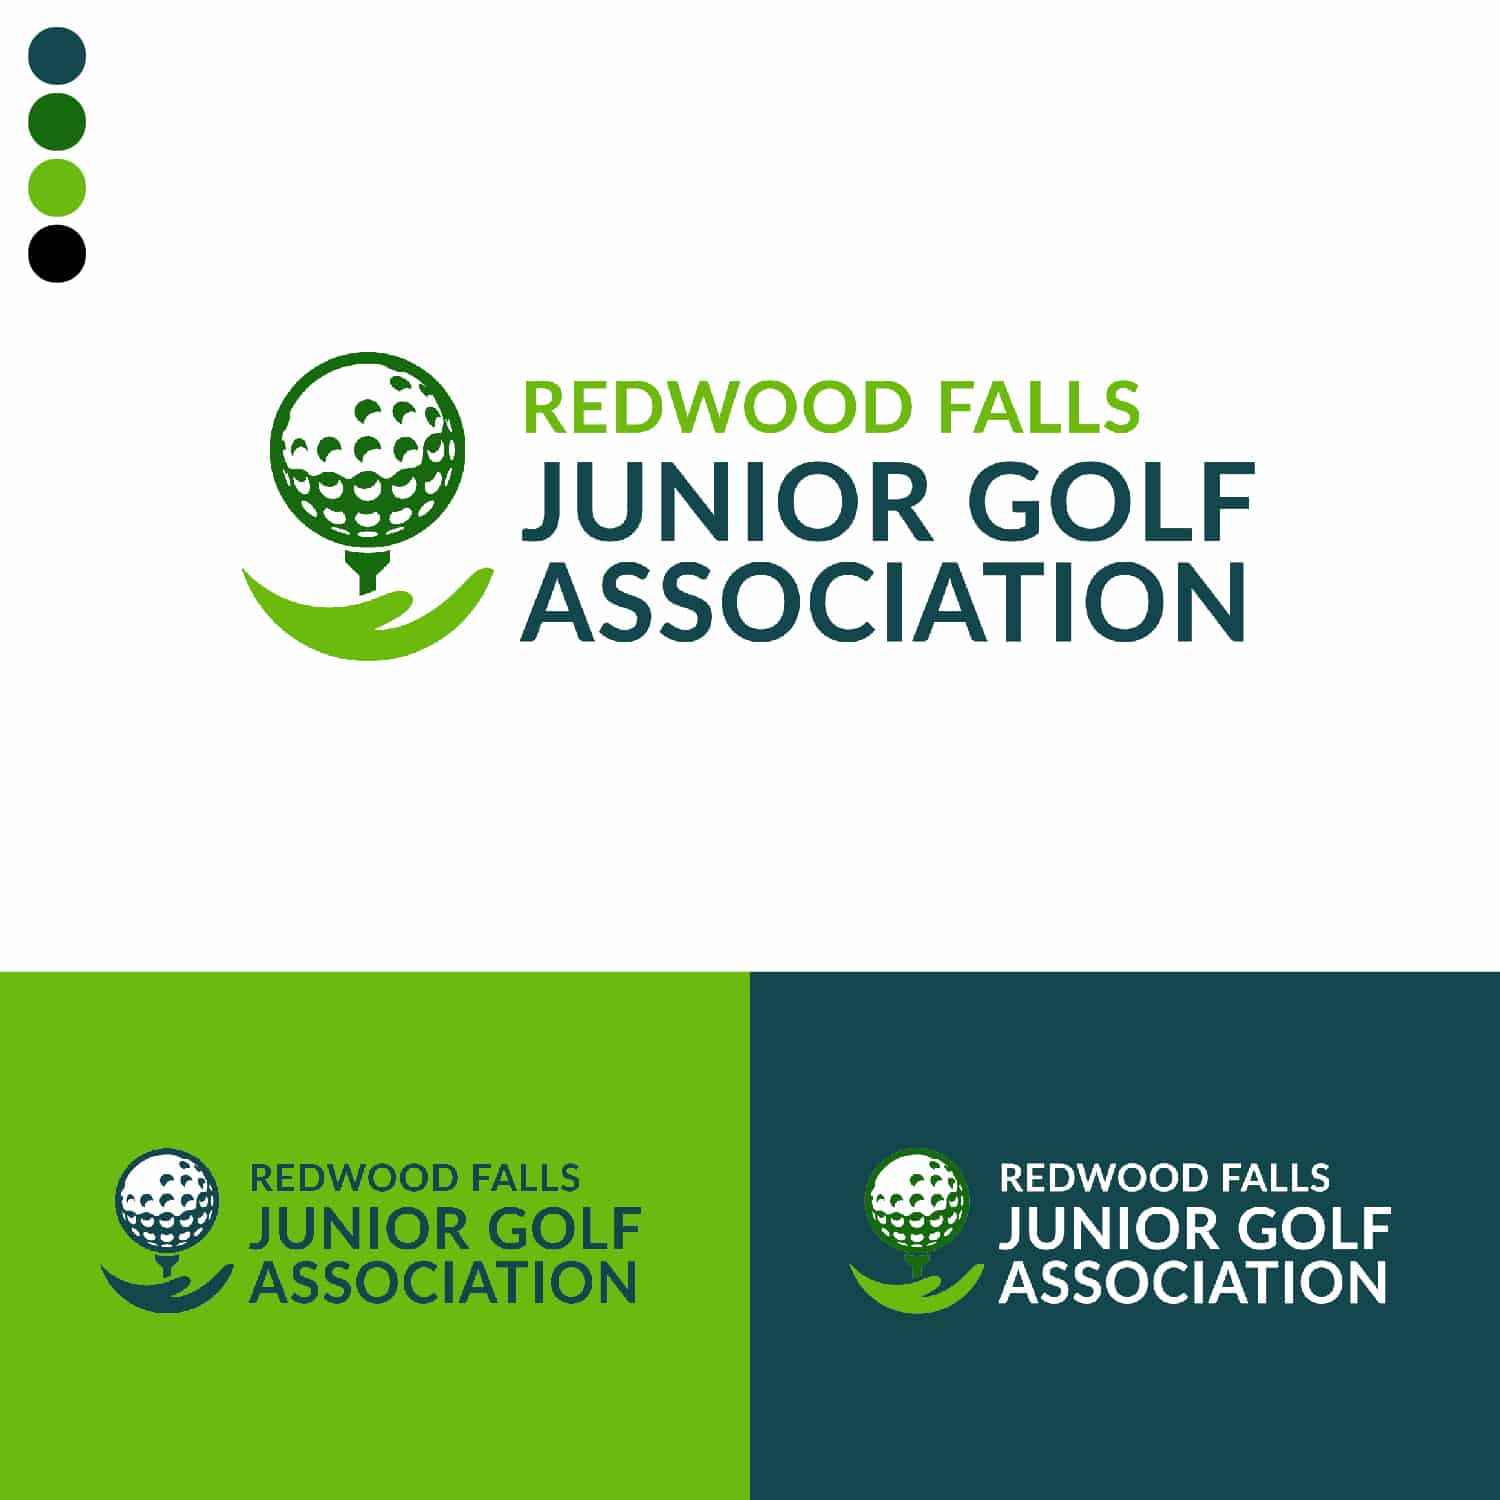 Redwood Falls Junior Golf Association